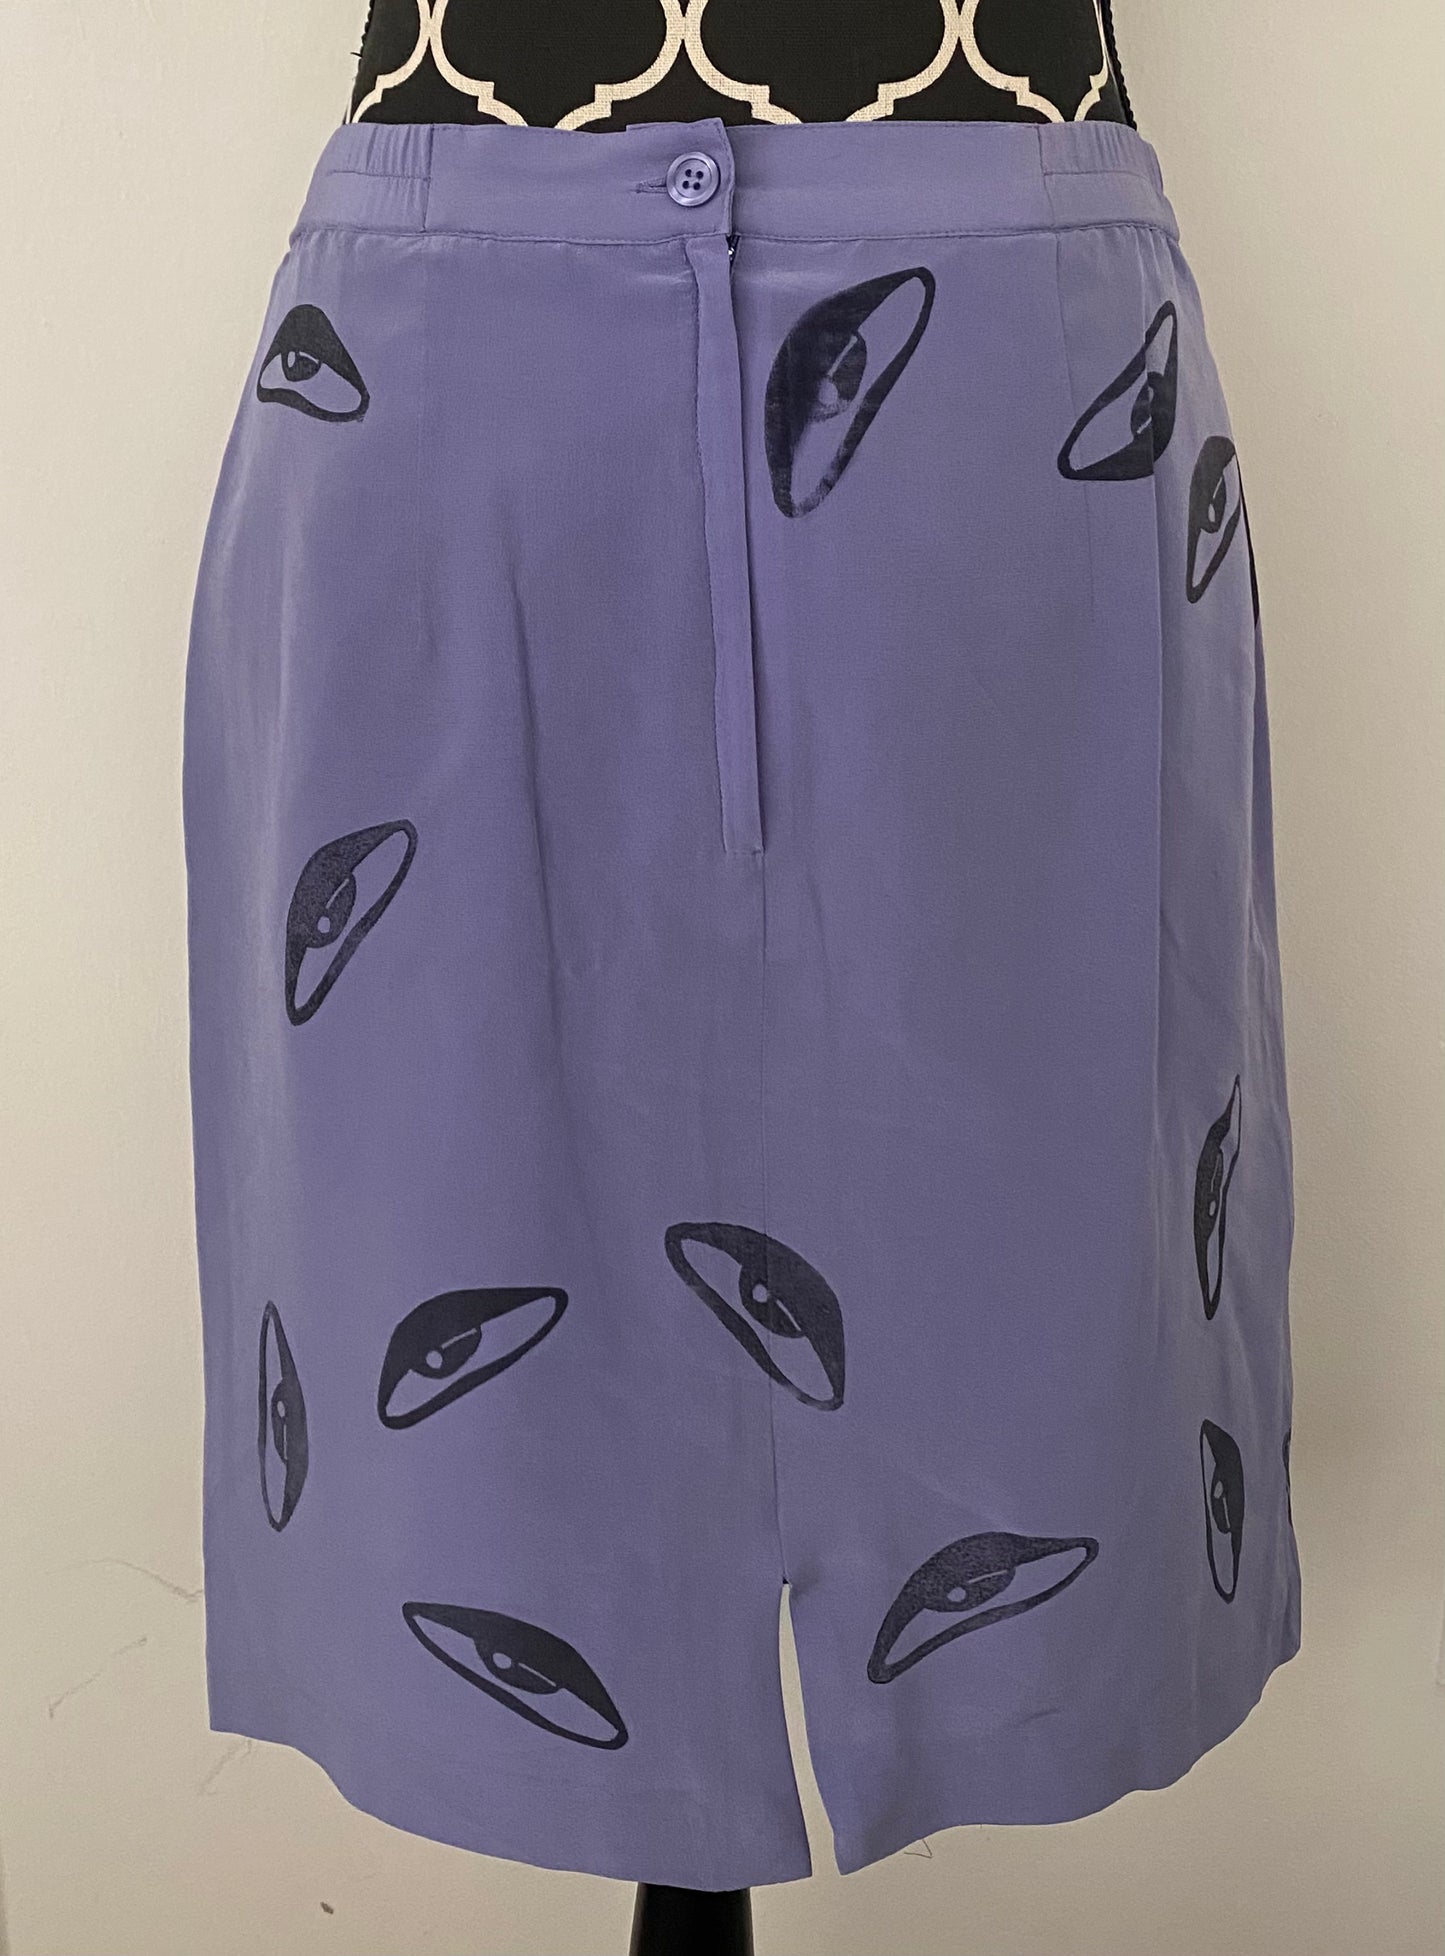 Invasion Printed Skirt